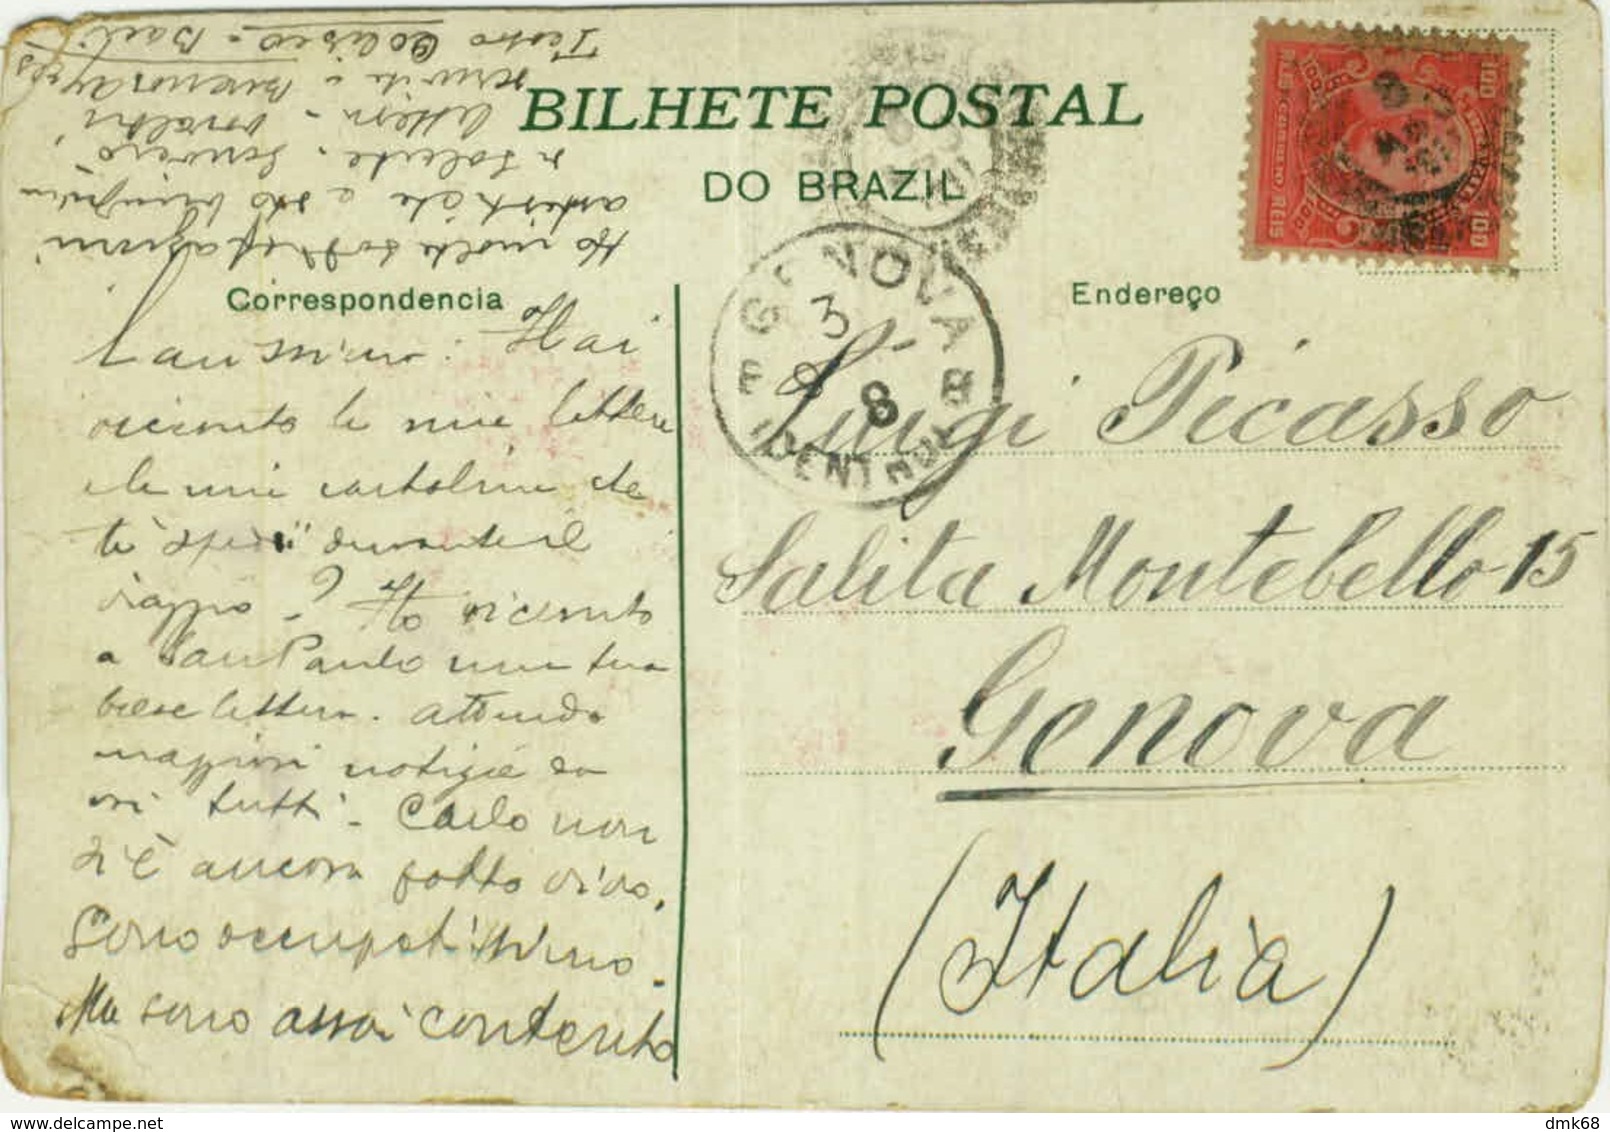 BRAZIL - BELLO HORIZONTE - ADMINISTRACAO DOS CORREIOS - EDICAO DES ARISTIDES & C. - 1908 (BG4100) - Belo Horizonte